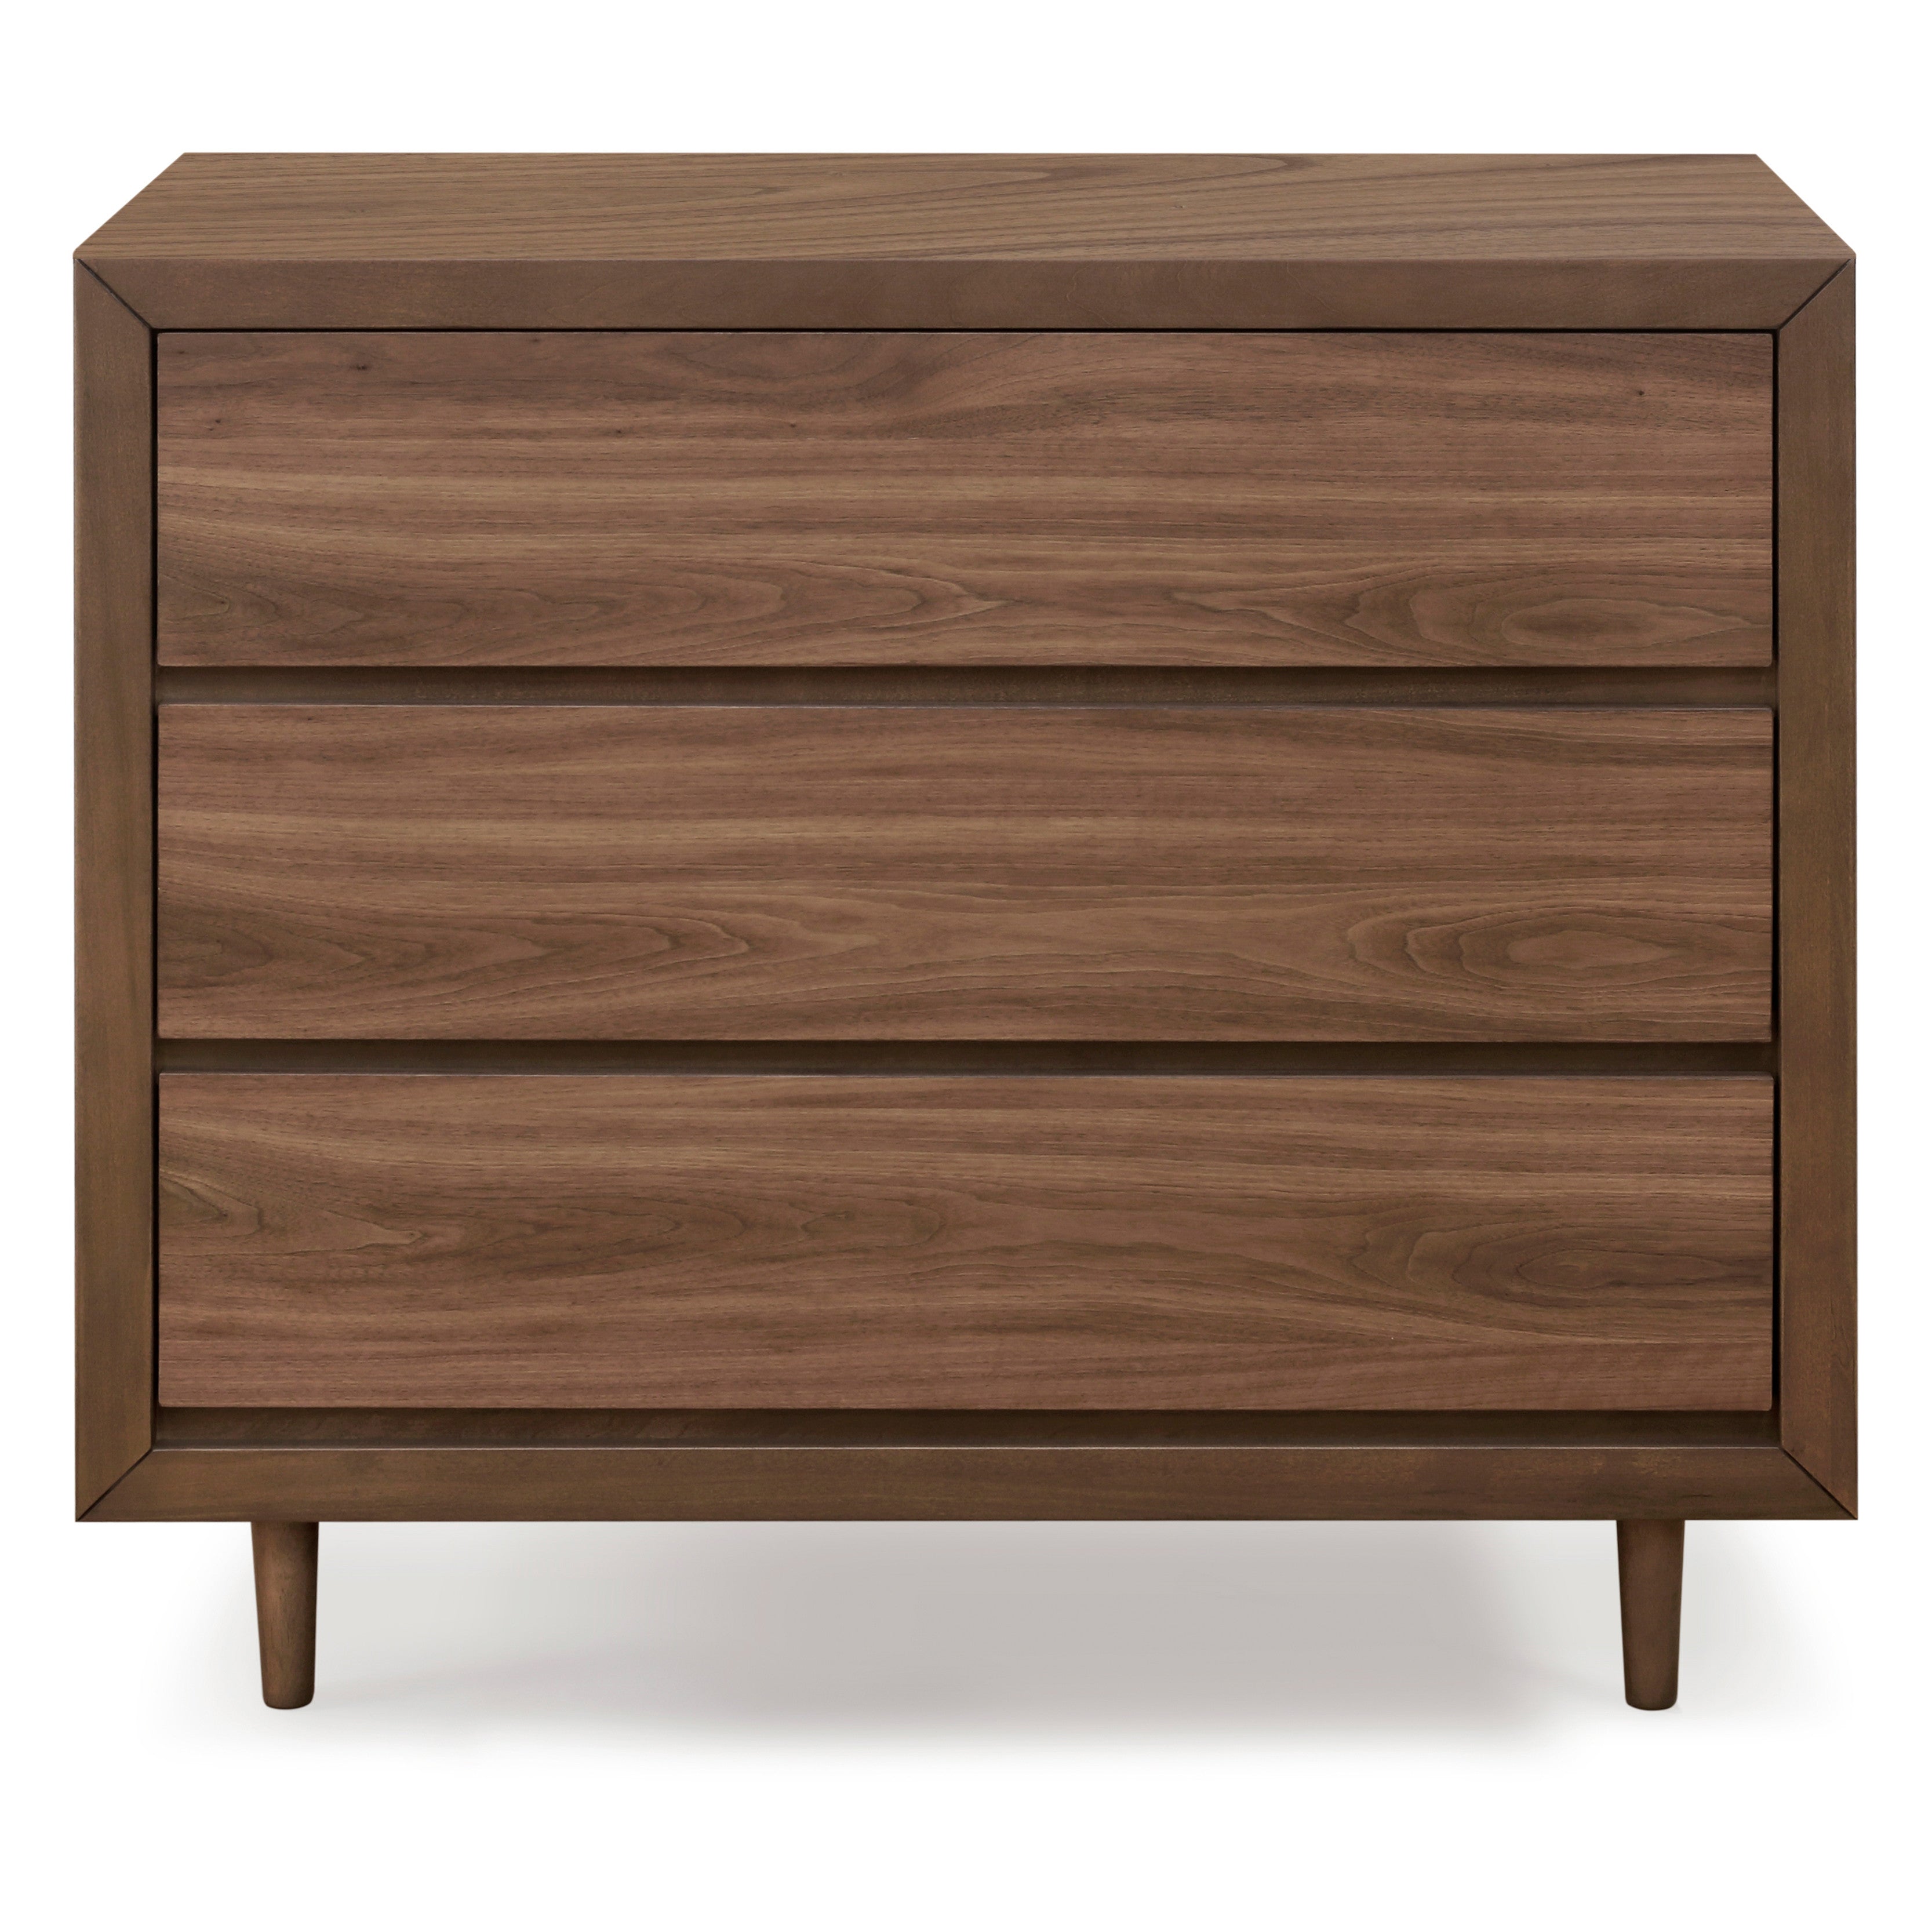 Bonavita Three-Drawer Dresser with Storage and Small Drawer on Surface, 65% Off